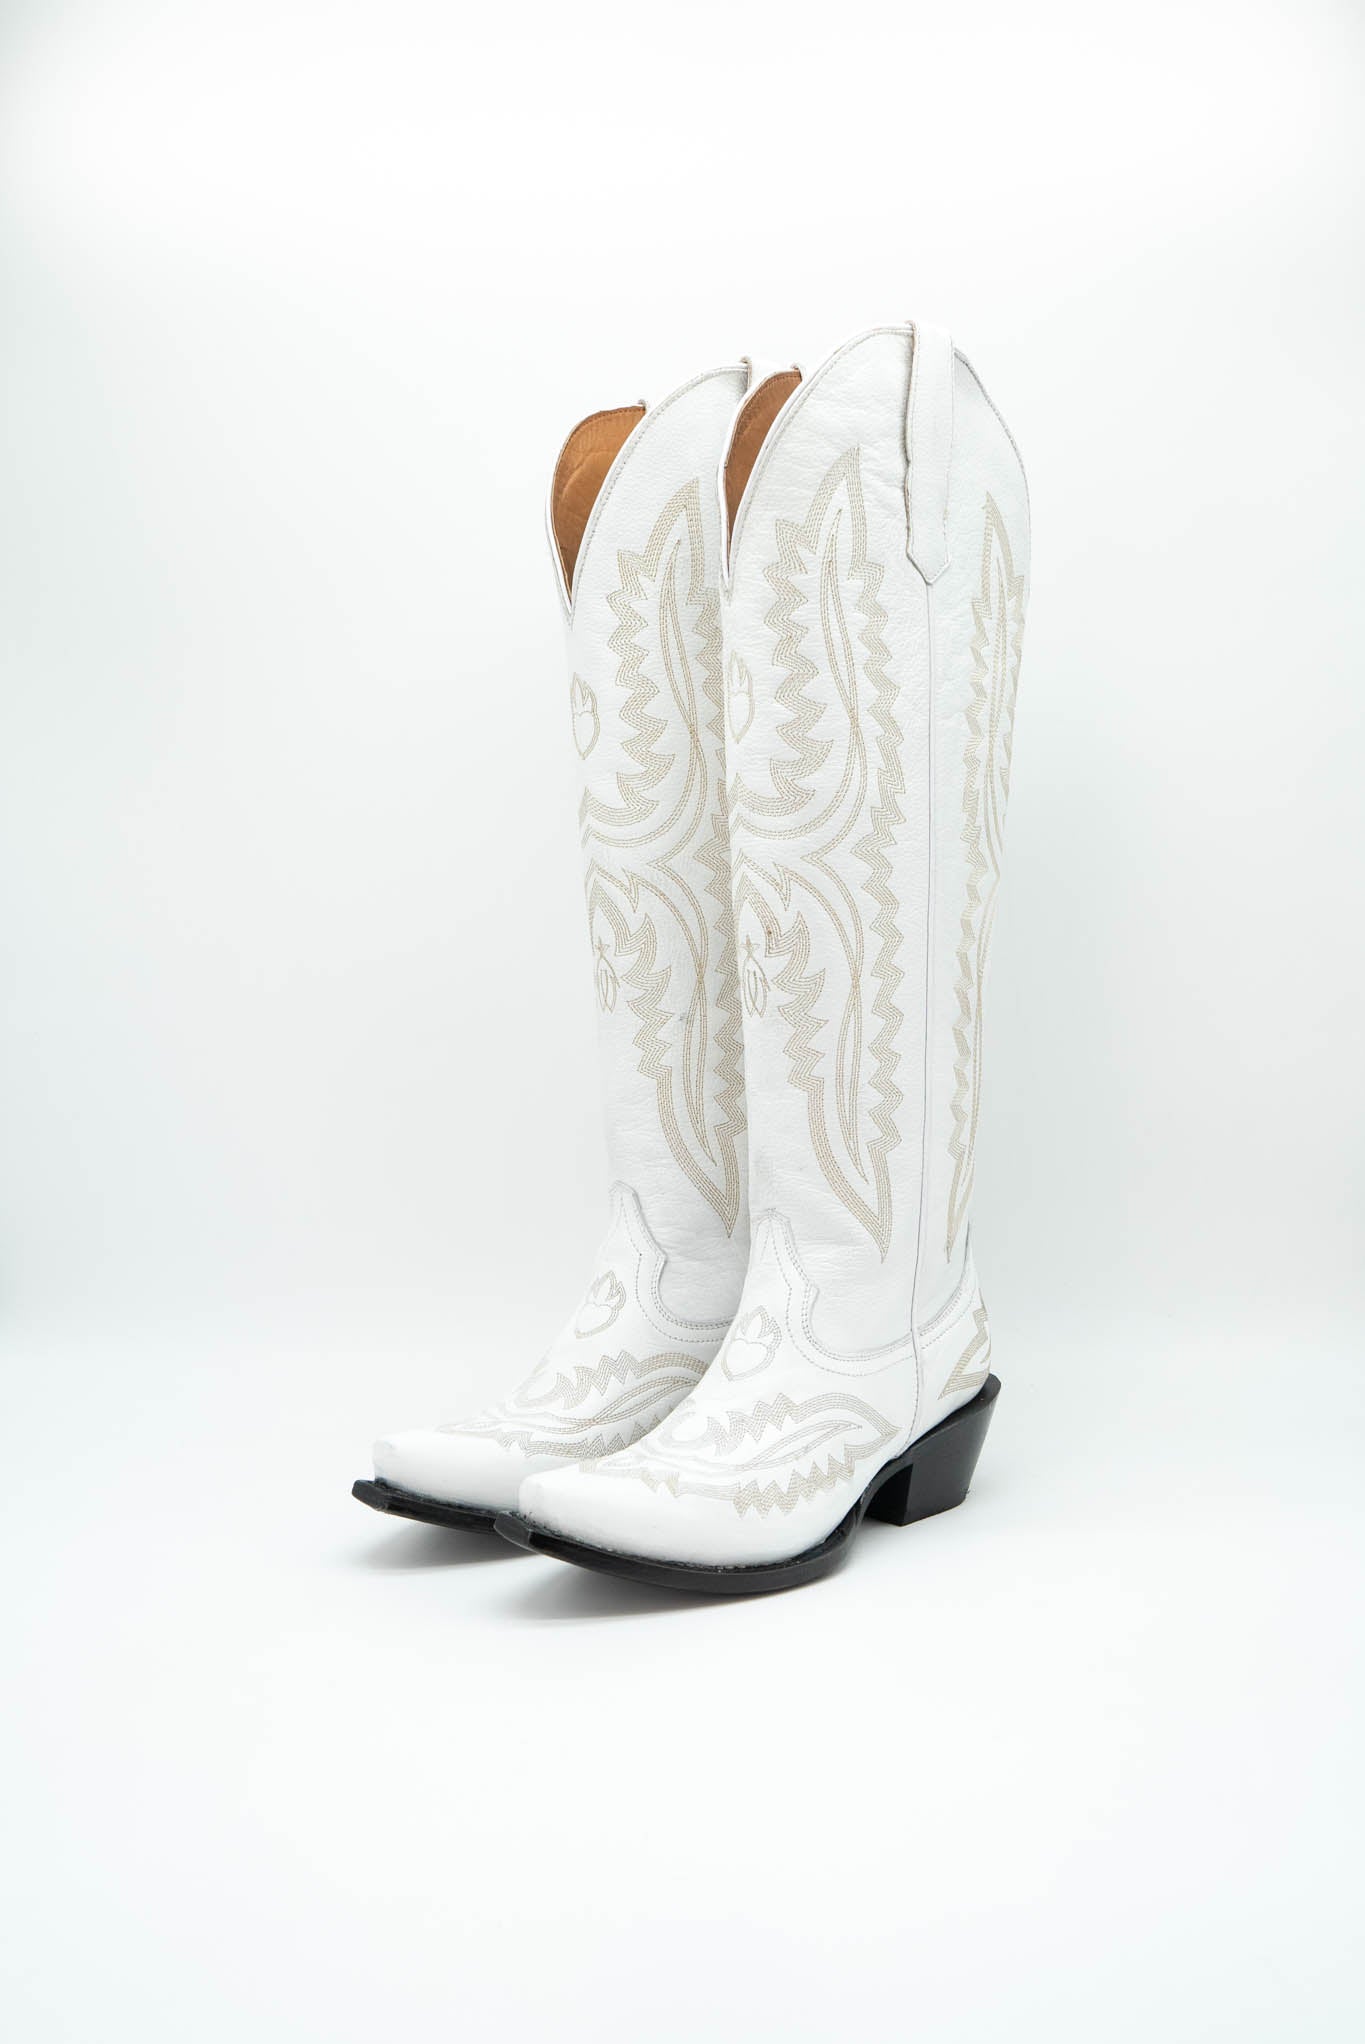 Valencia Brigith Tall Point Toe Cowgirl Boot